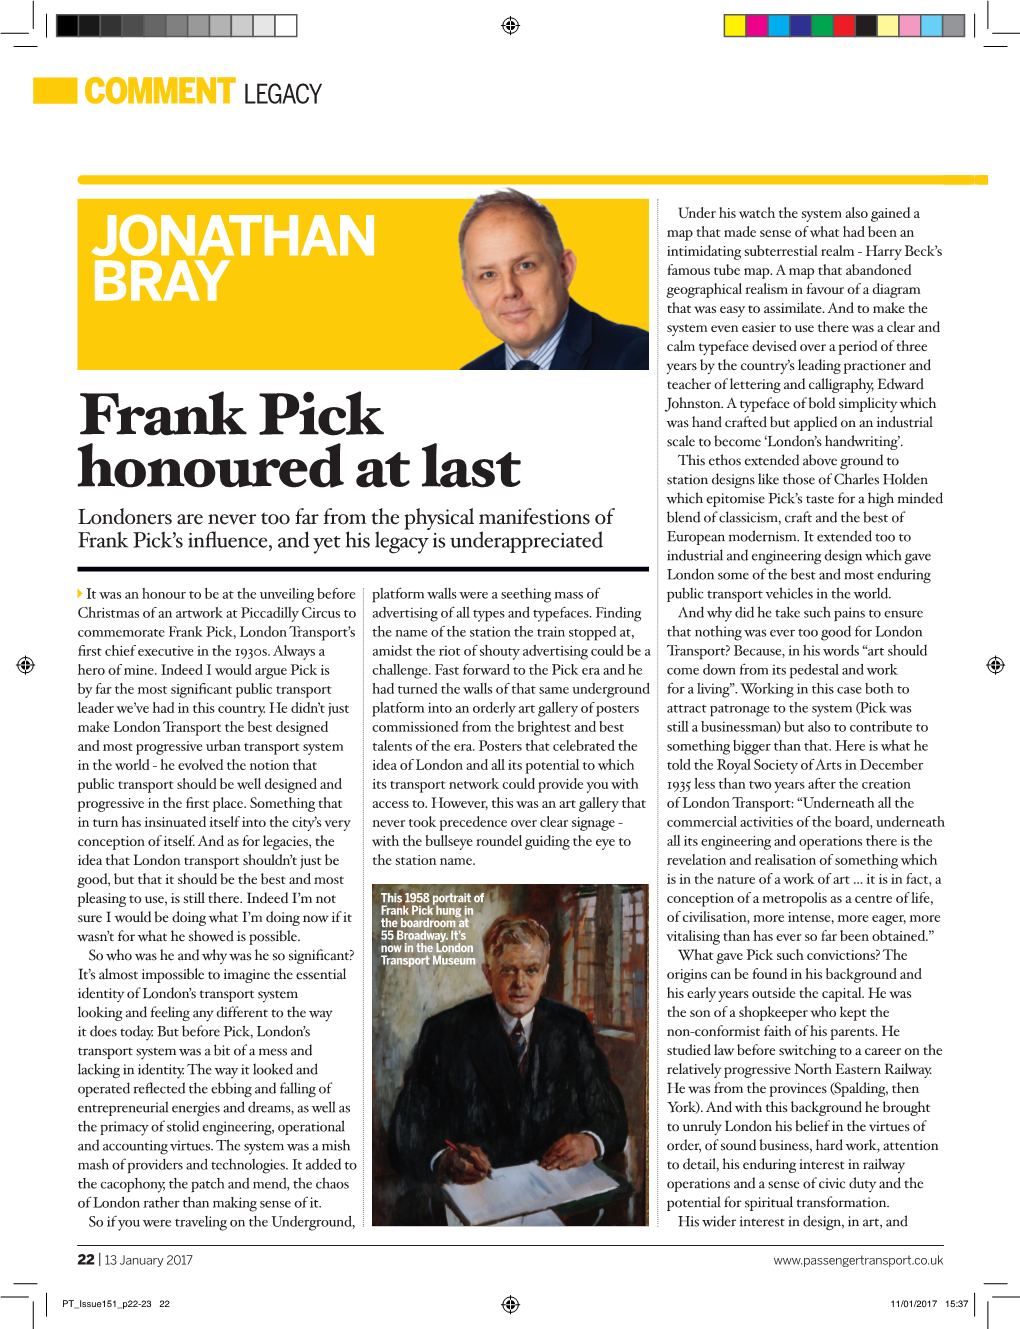 Frank Pick Honoured at Last